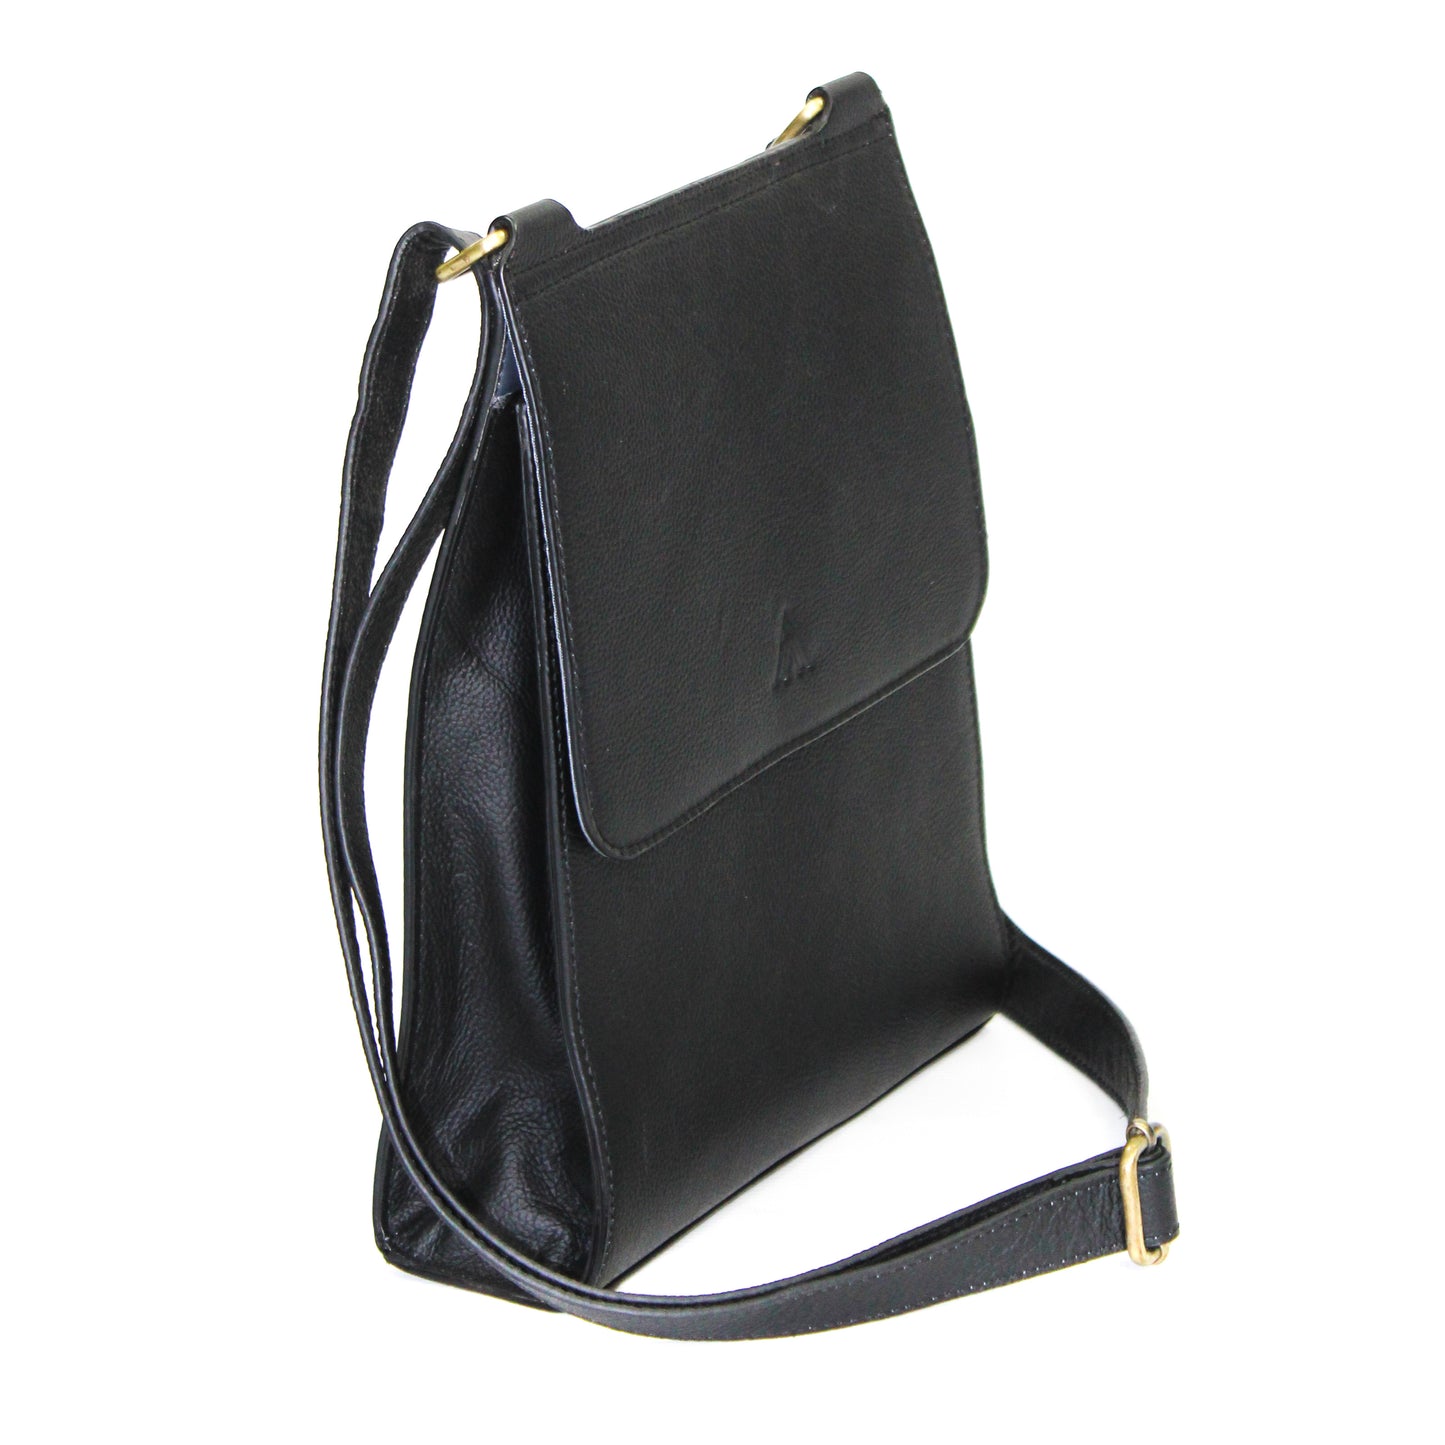 Pebbled Black Leather Flap Bag